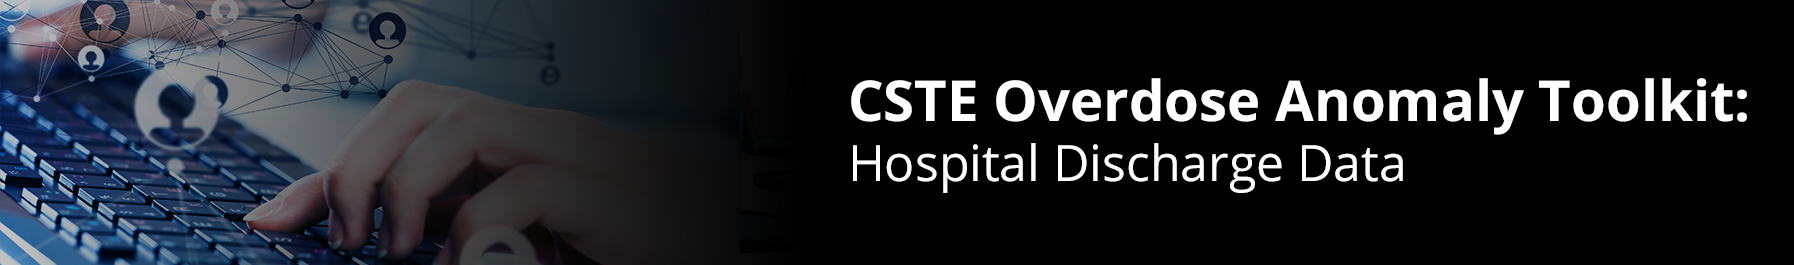 CSTE Overdose Anomaly Toolkit: Hospital Discharge Data